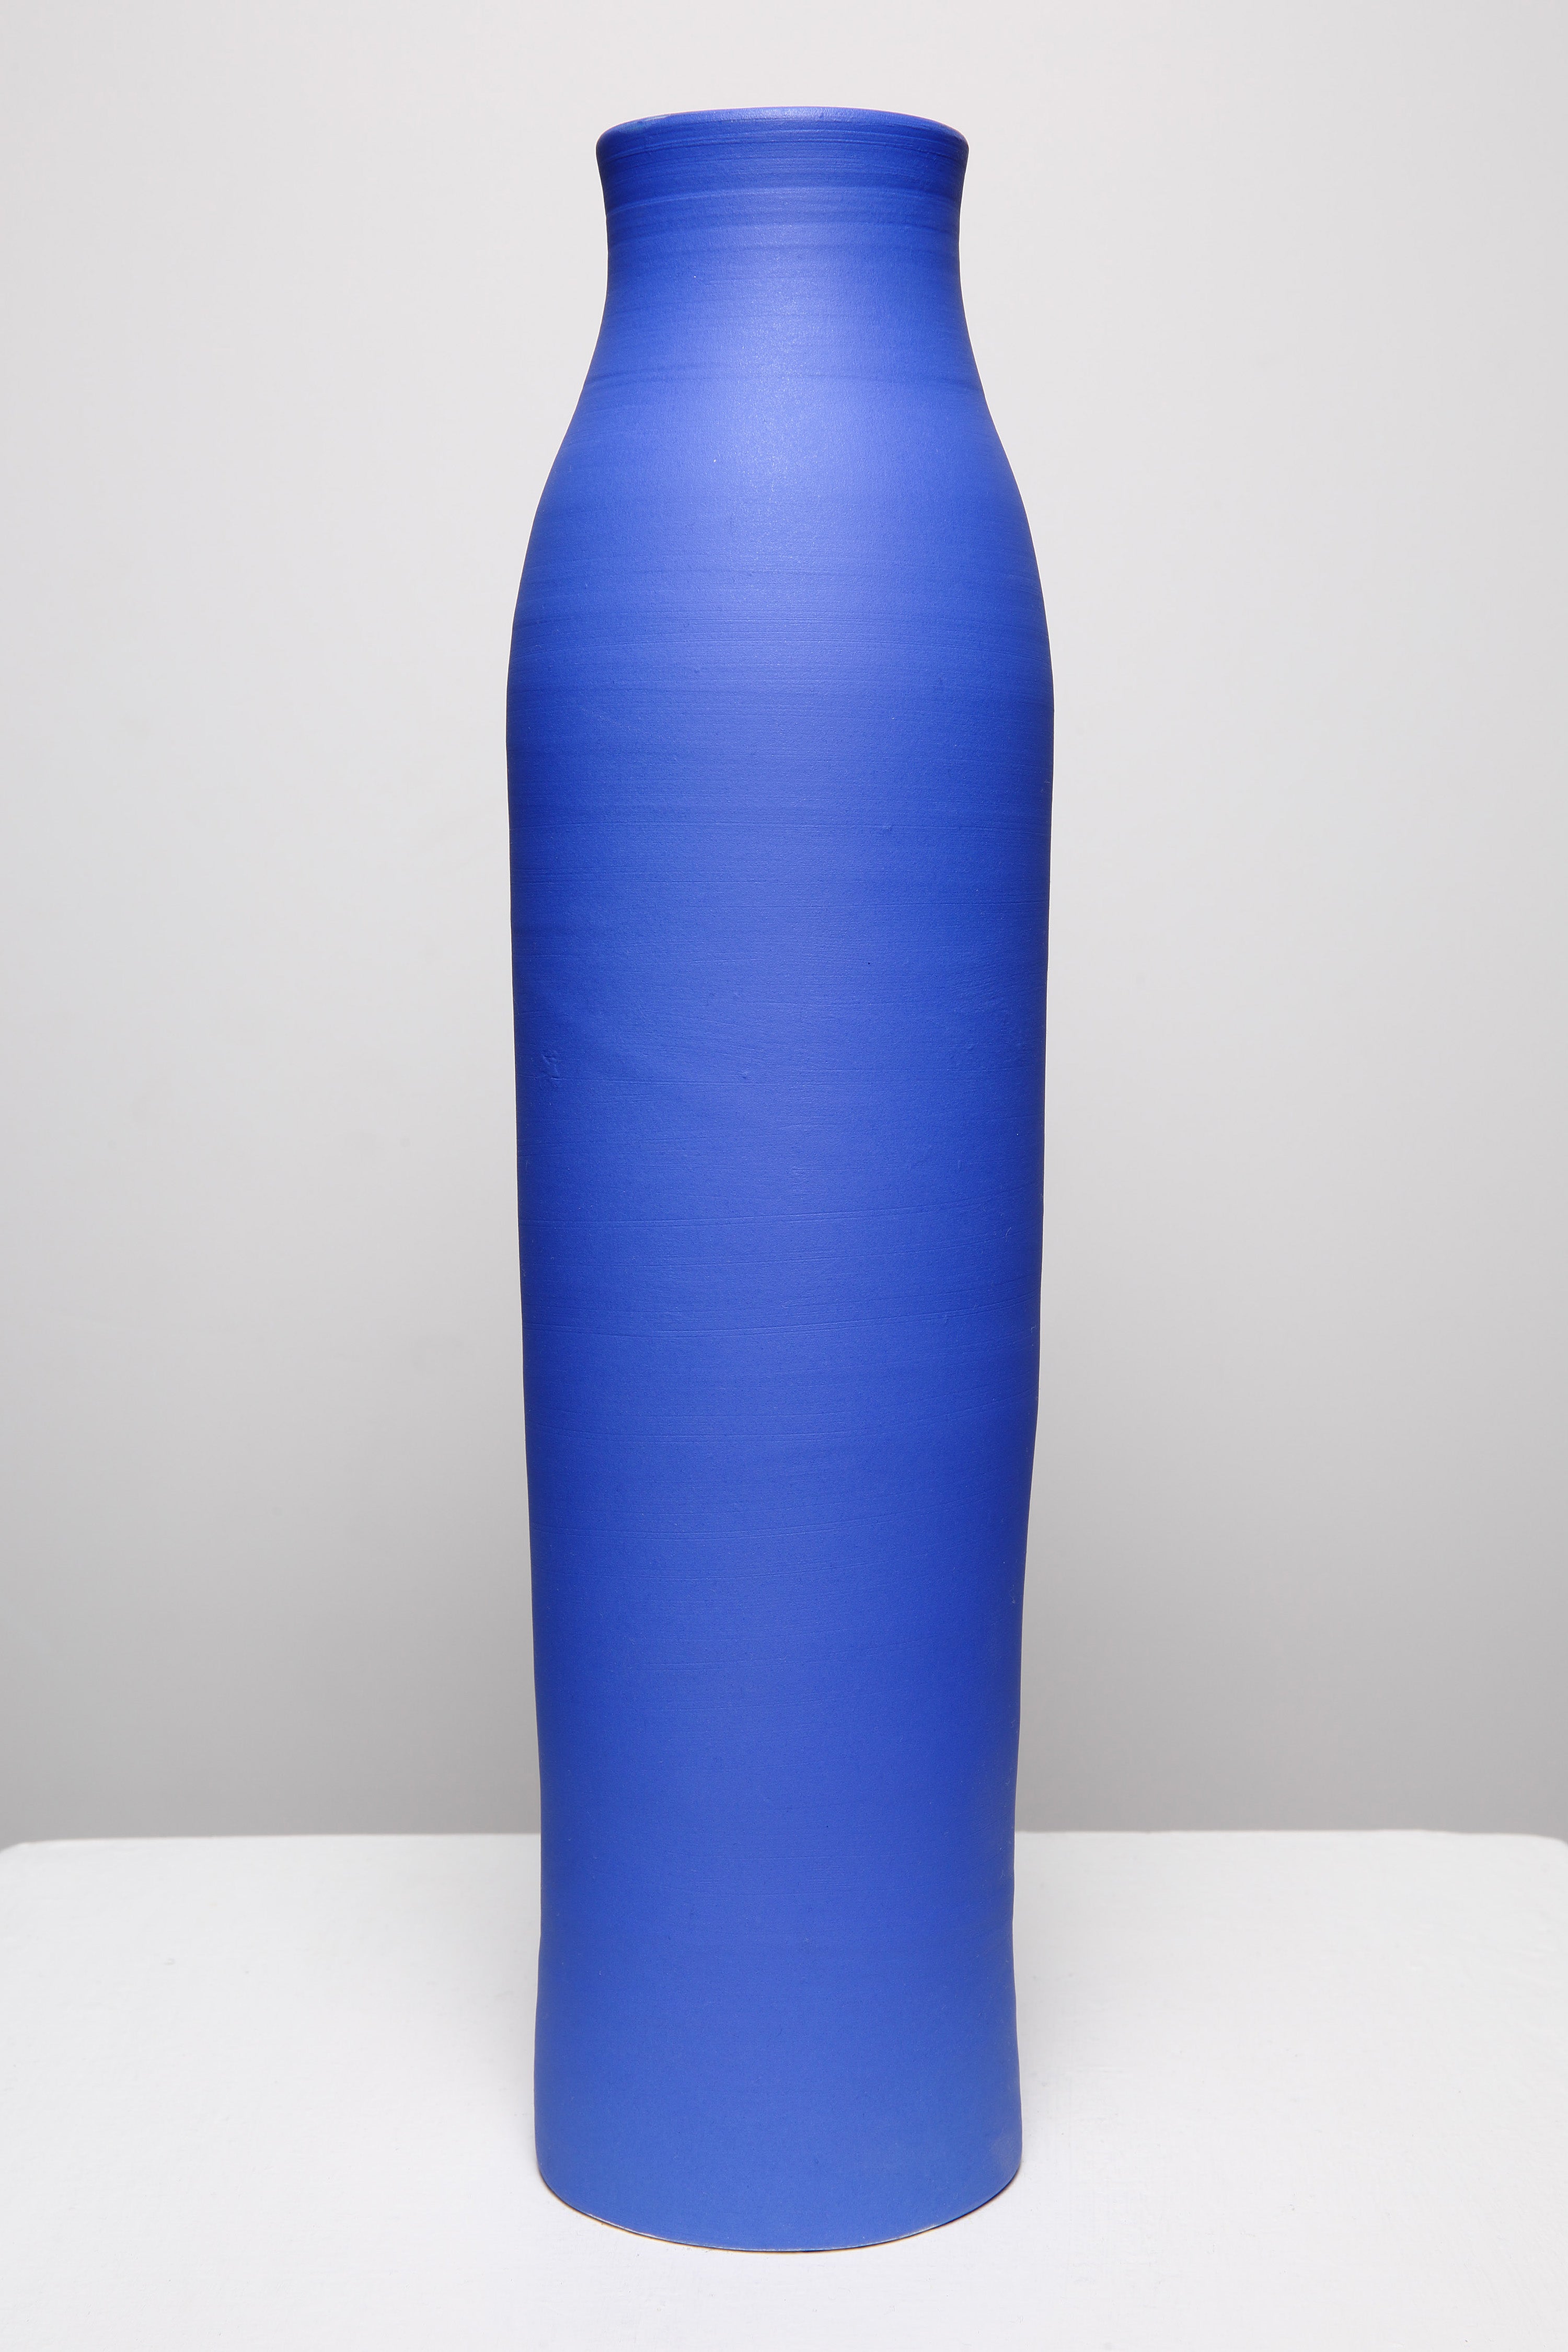 Majorelle Blue Vase 231